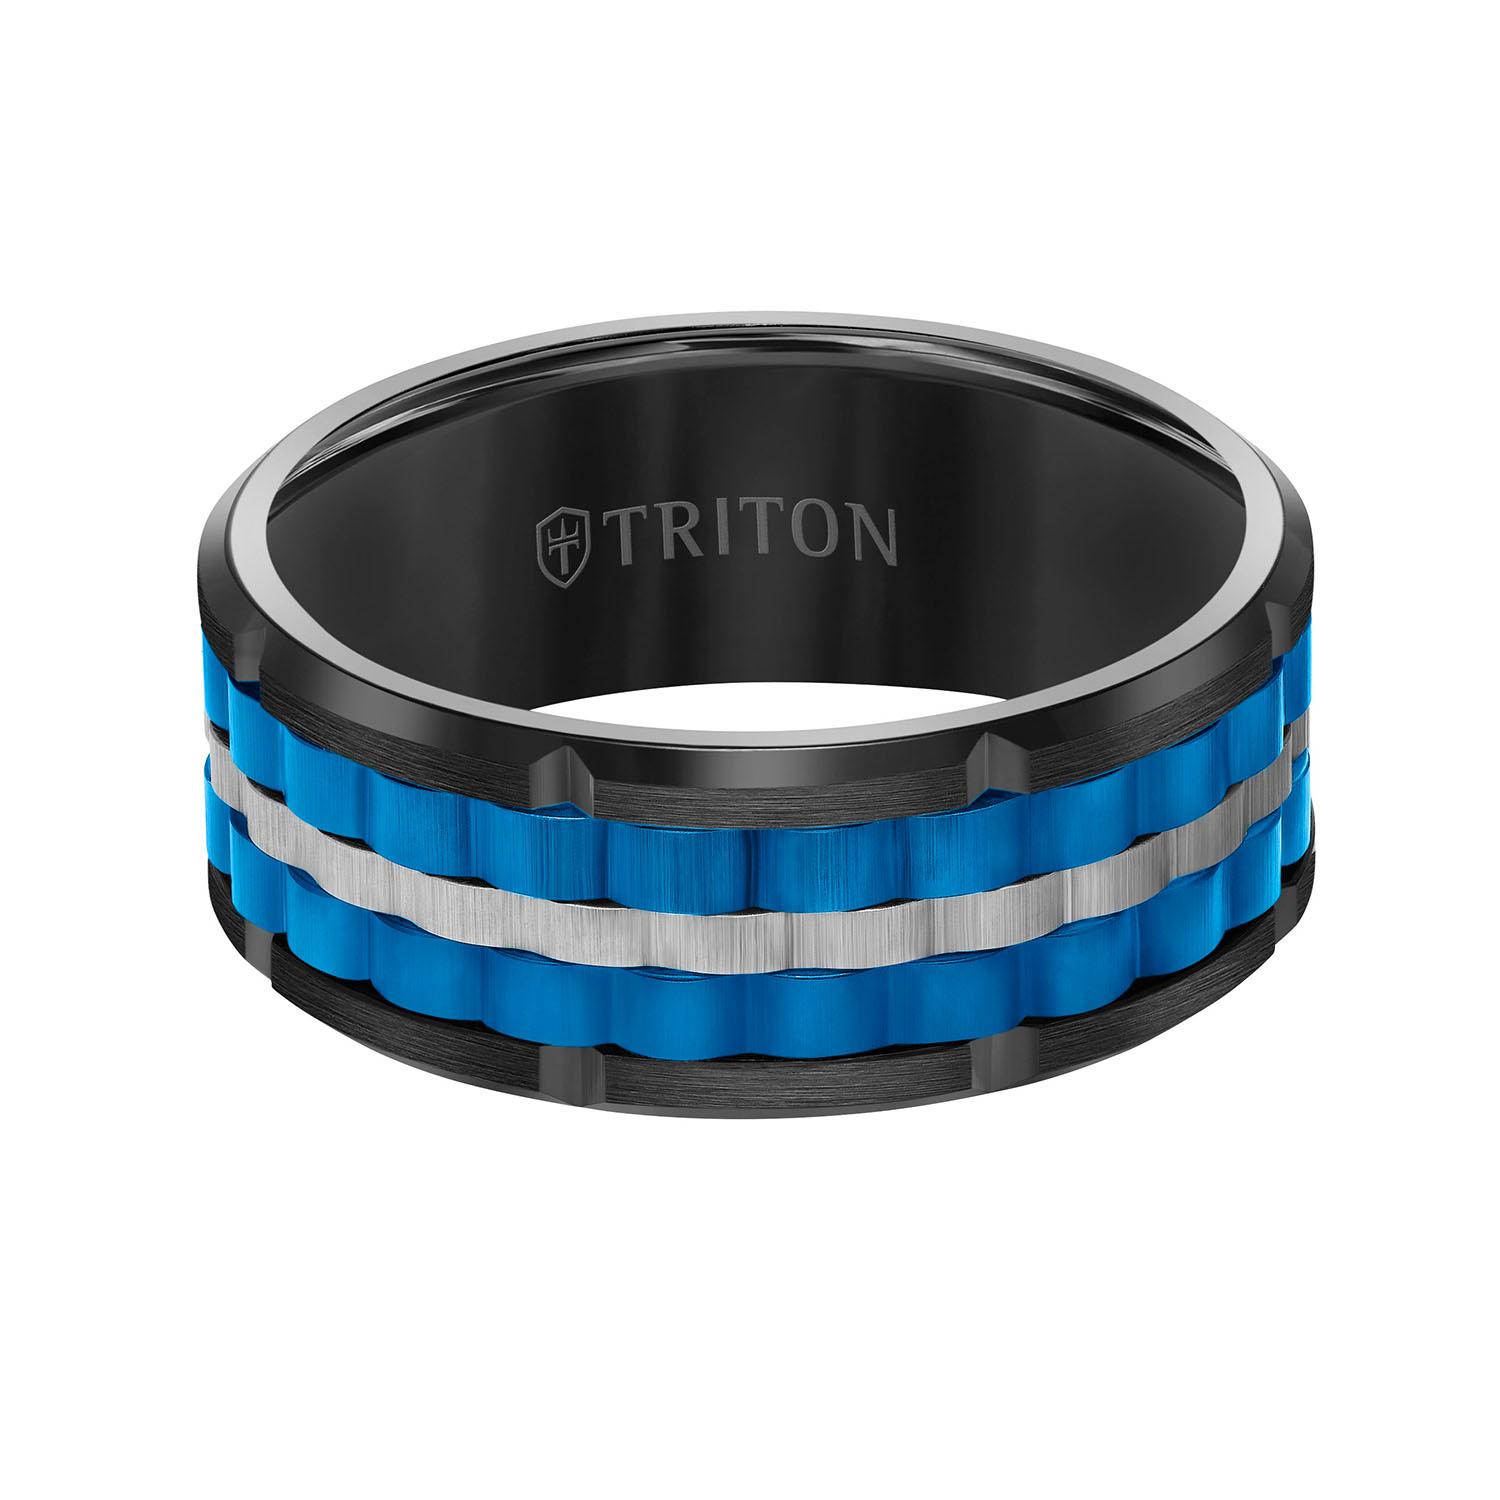 Gents Triton 9mm Tungsten Band with Basketweave Design